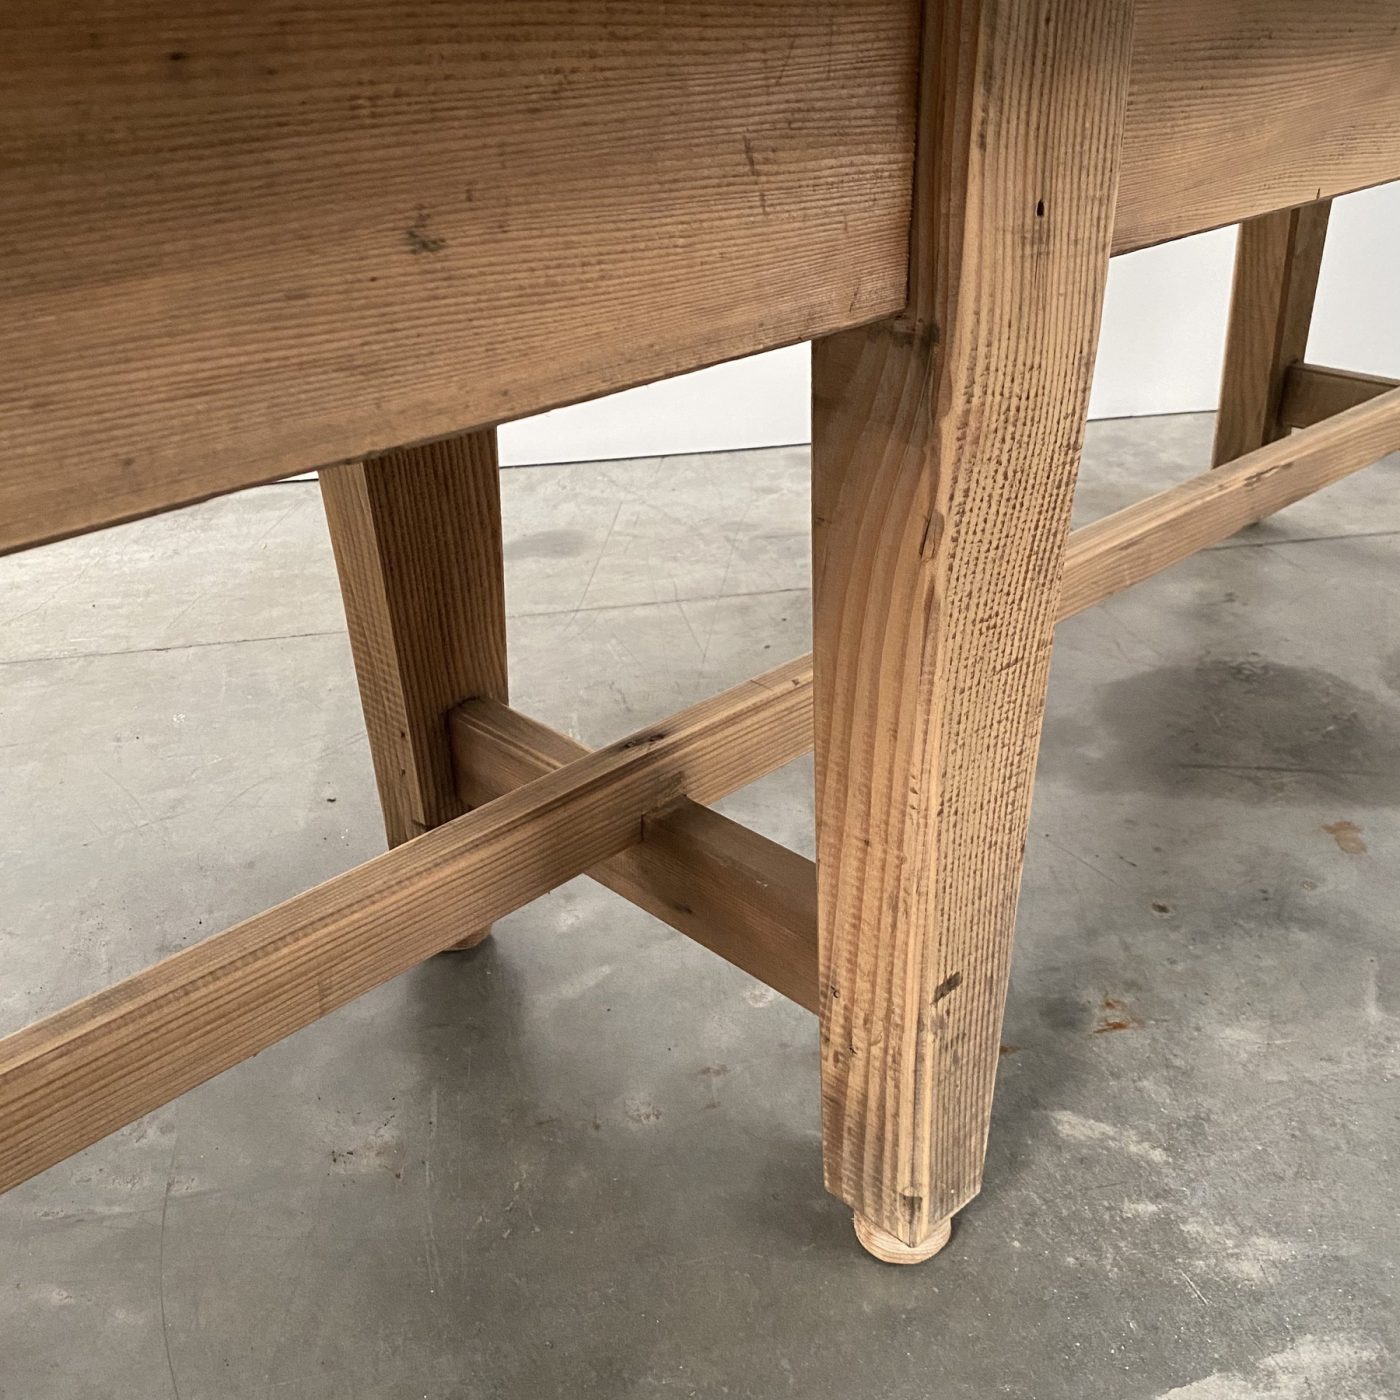 objet-vagabond-pine-table0001